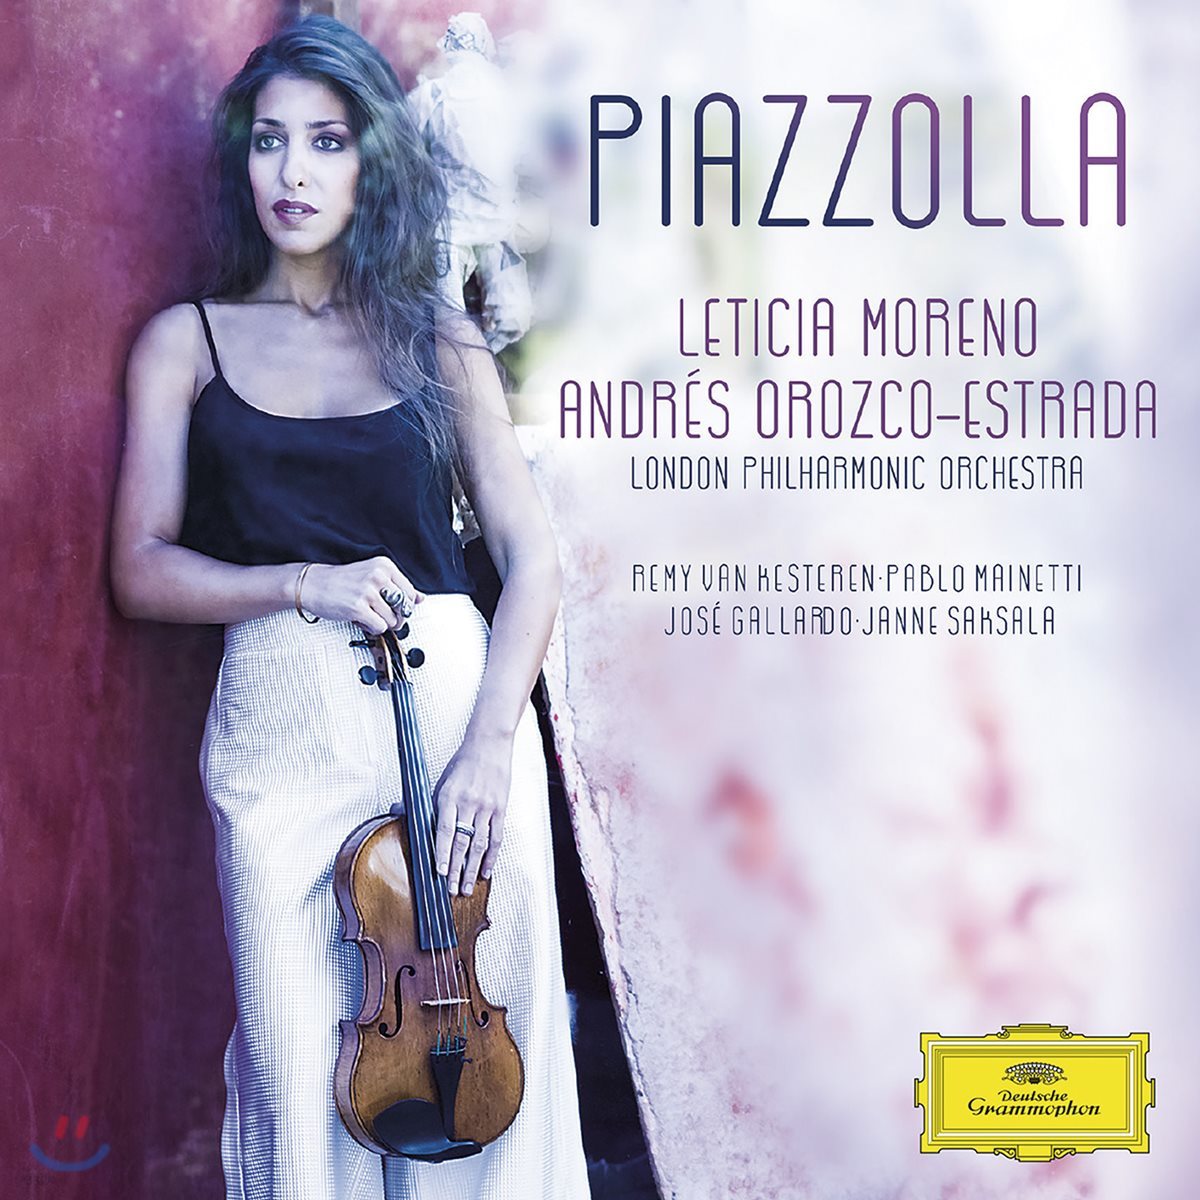 Leticia Moreno 바이올린으로 연주하는 피아졸라 유명 작품집 (Piazzolla)